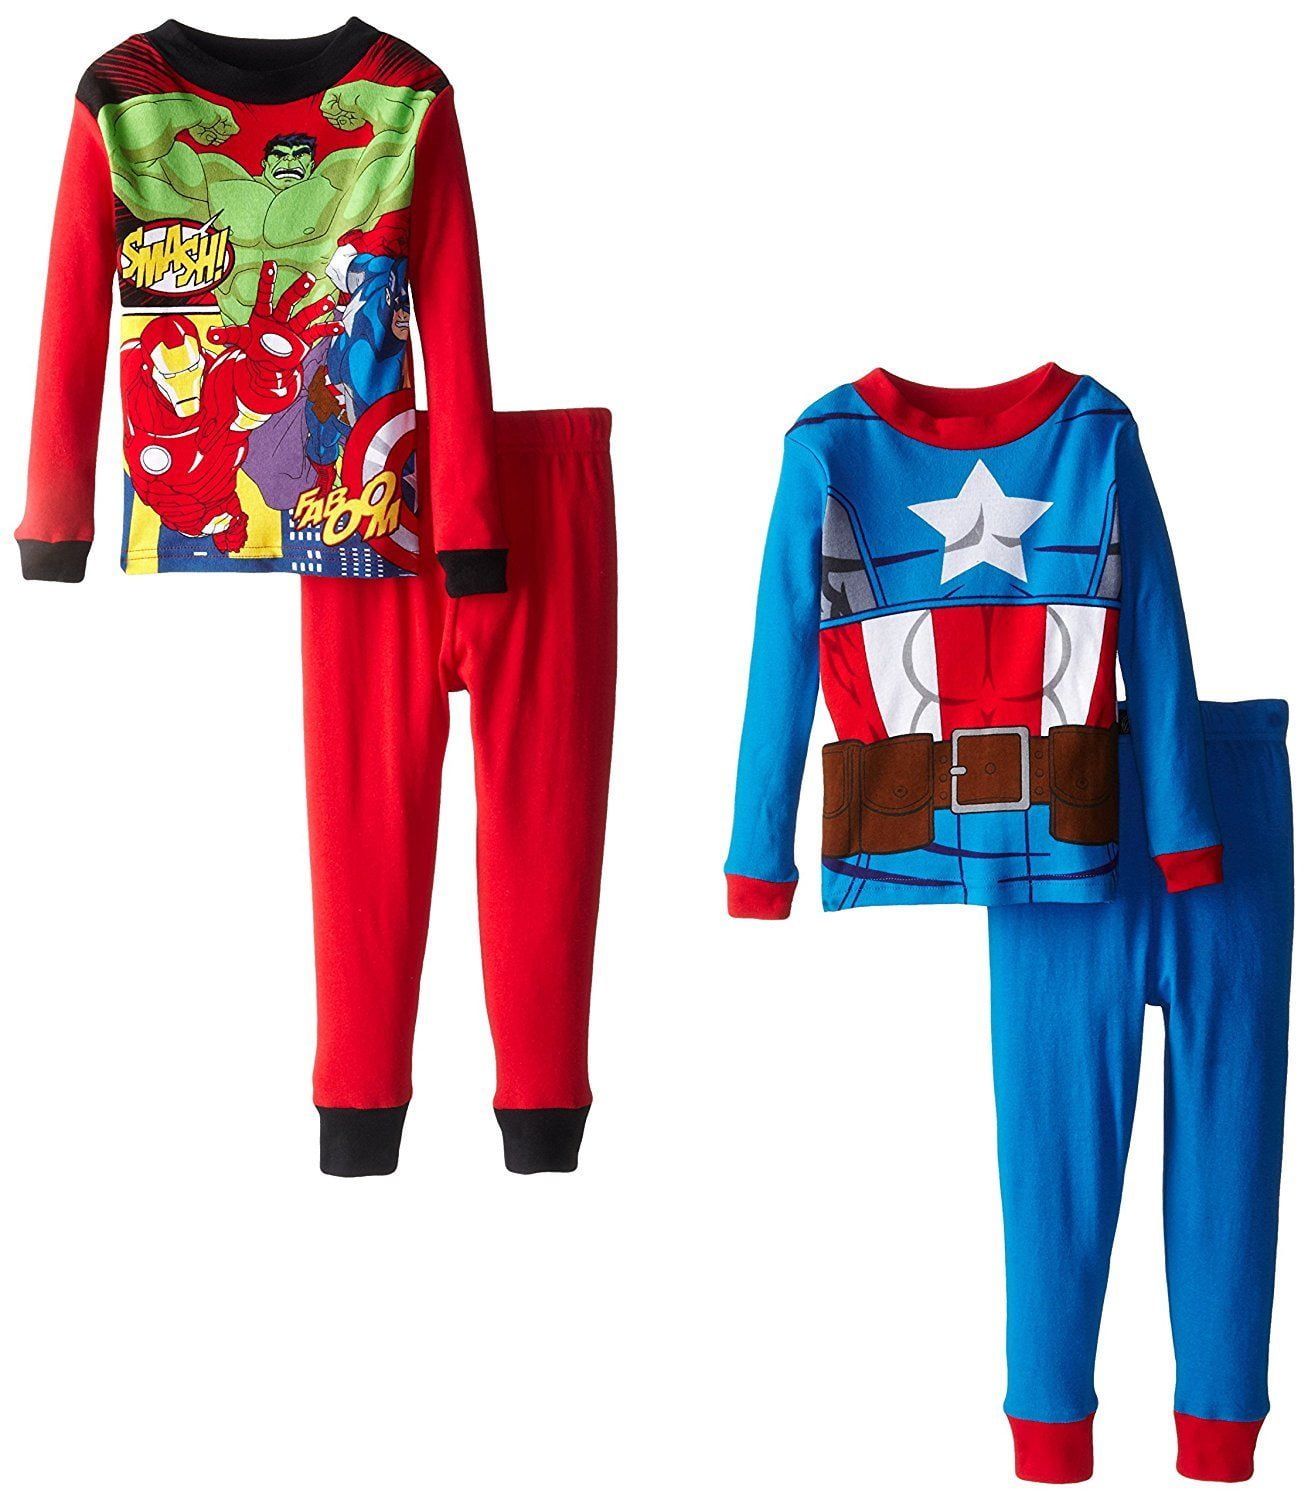 Details about   Disney Store Marvel The Avengers Captain America Costume Pajama Set Boy Size 6 